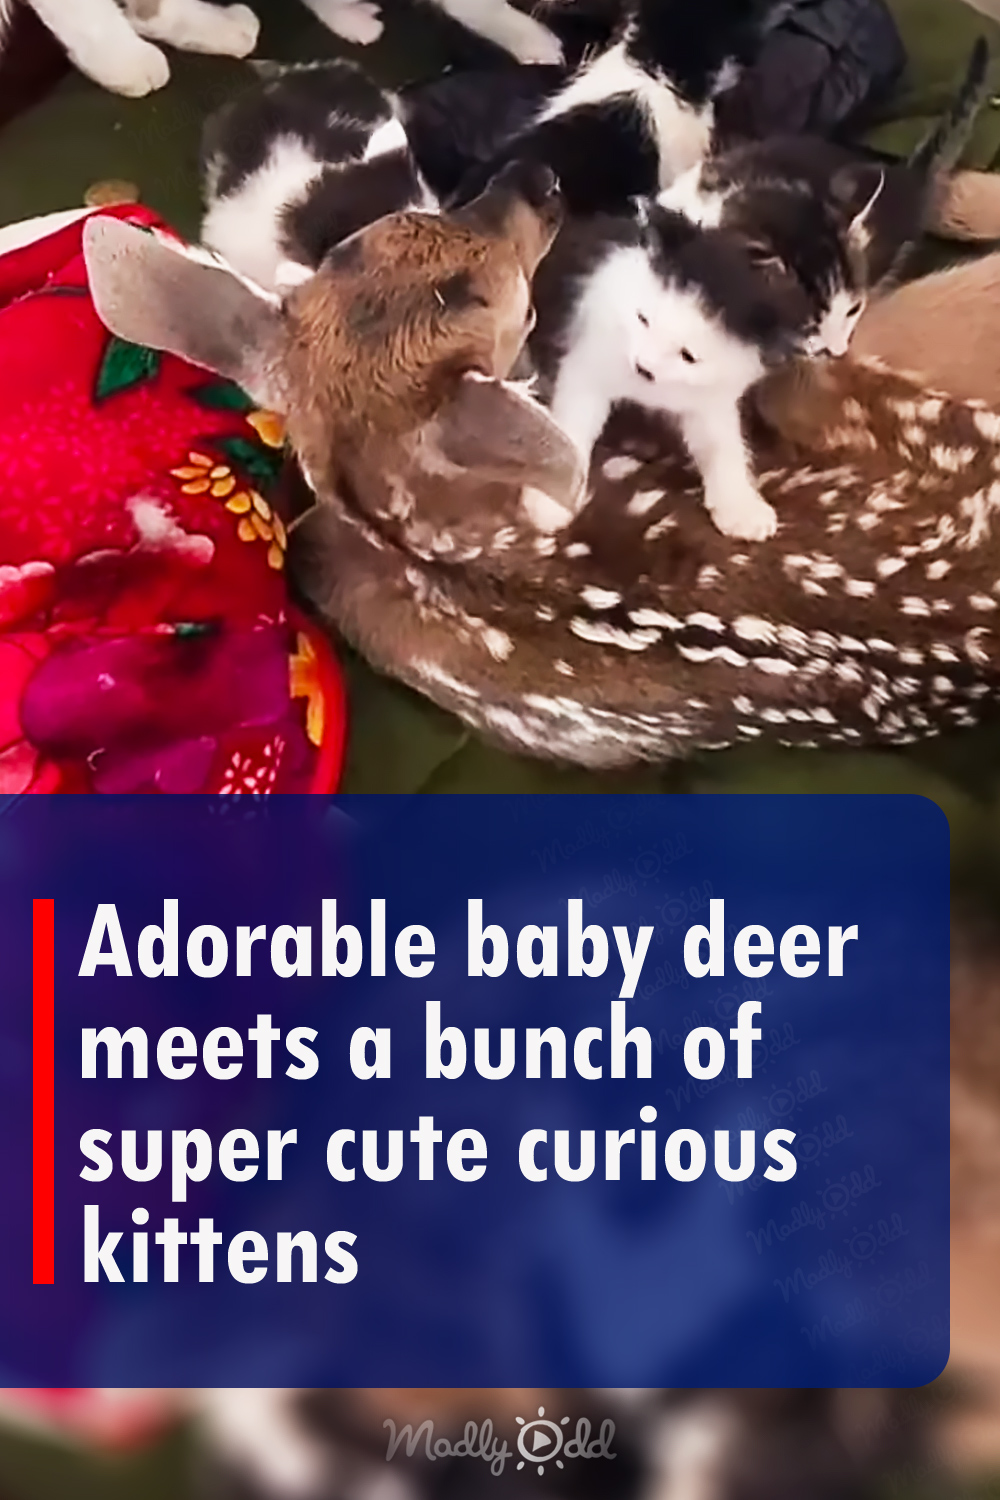 Adorable baby deer meets a bunch of super cute curious kittens